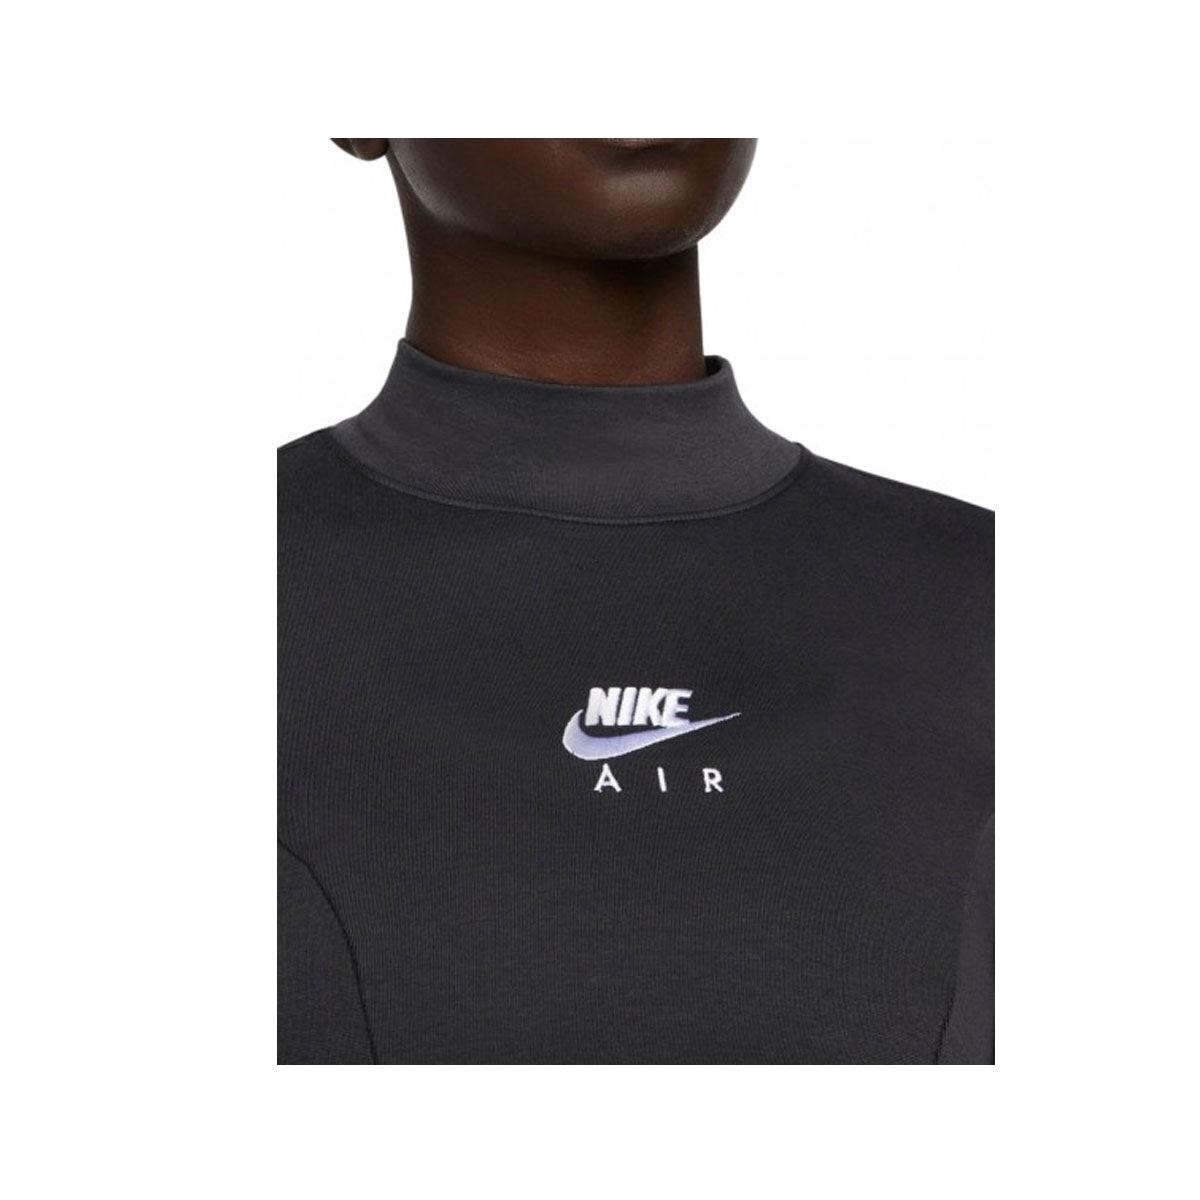 Nike Women's Air Long Sleeved Dress